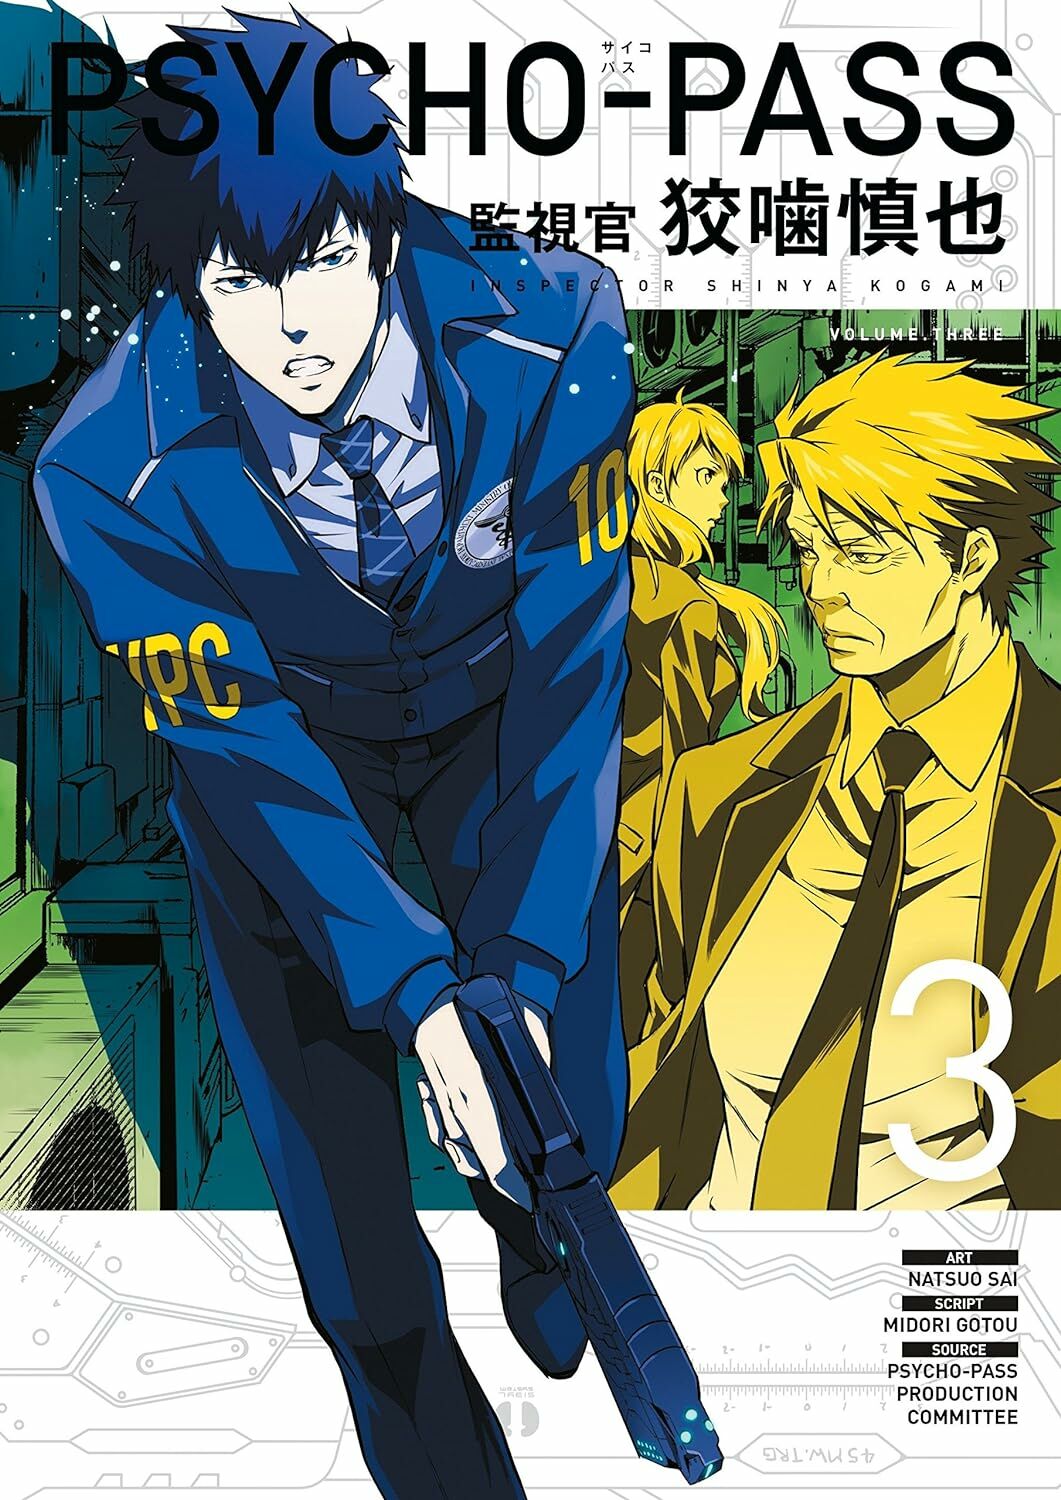 Psycho-pass: Inspector Shinya Kogami Volume 2: Inspector Sinhya Kogami  Volume 2 : GOTU, MIDORI: Amazon.in: Books